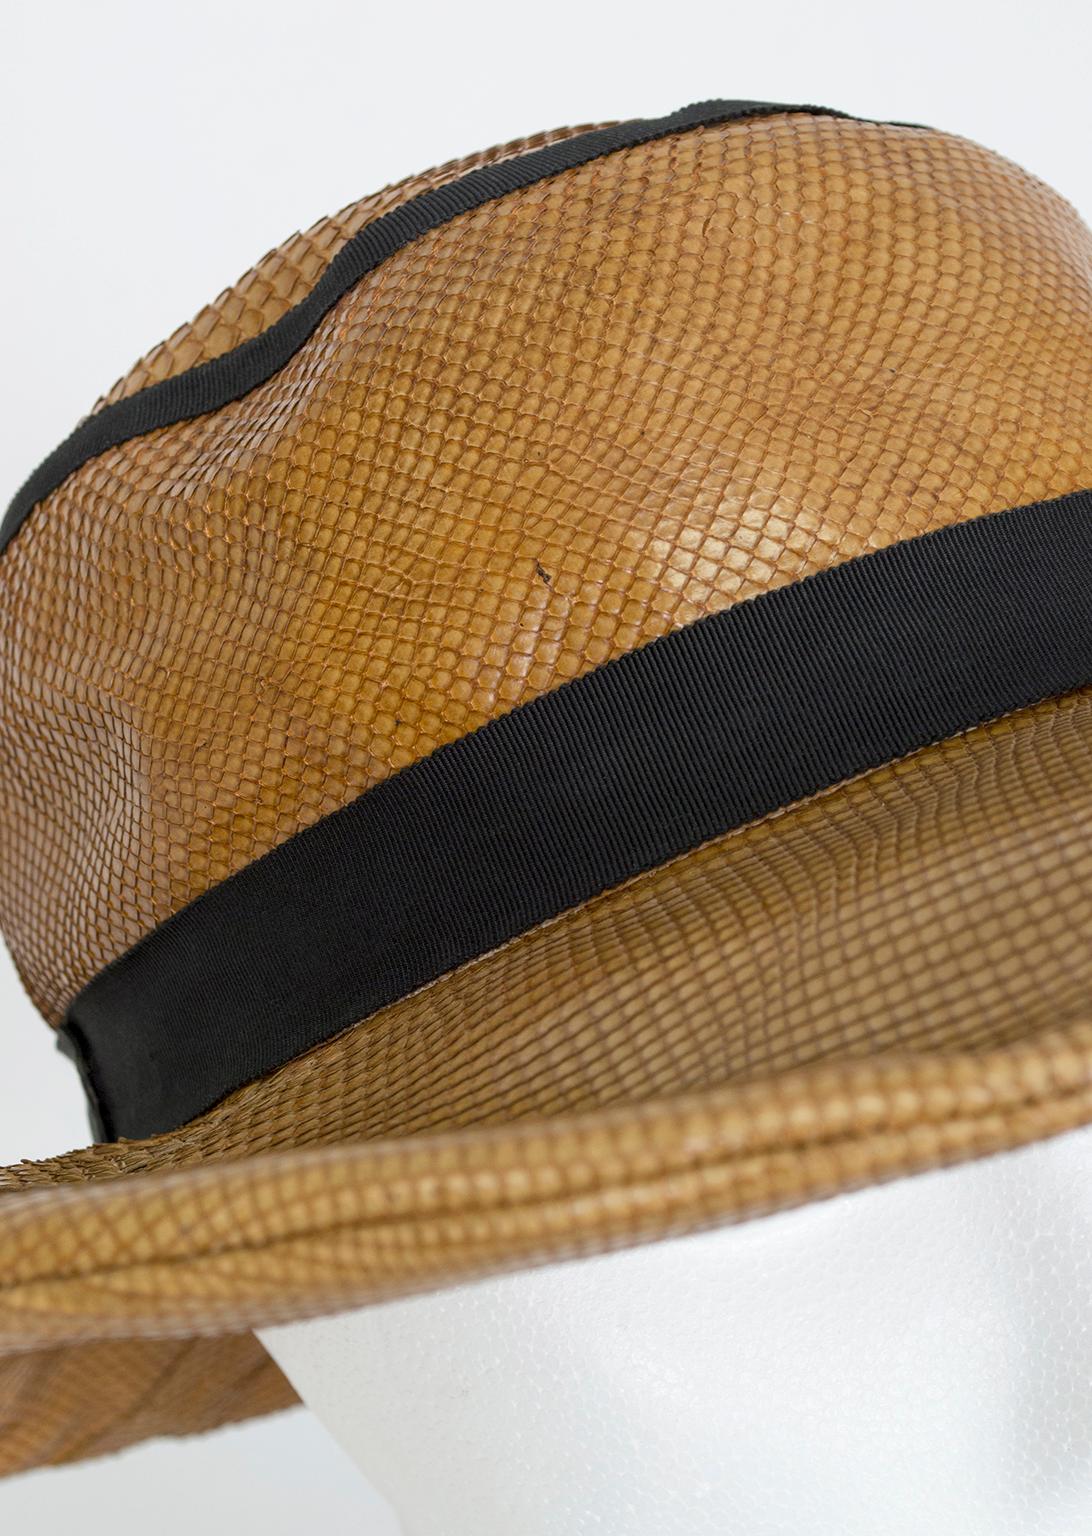 Women's Mr. John Tobacco Snakeskin Wide Brim Cartwheel Hat, French Room – S, 1960s